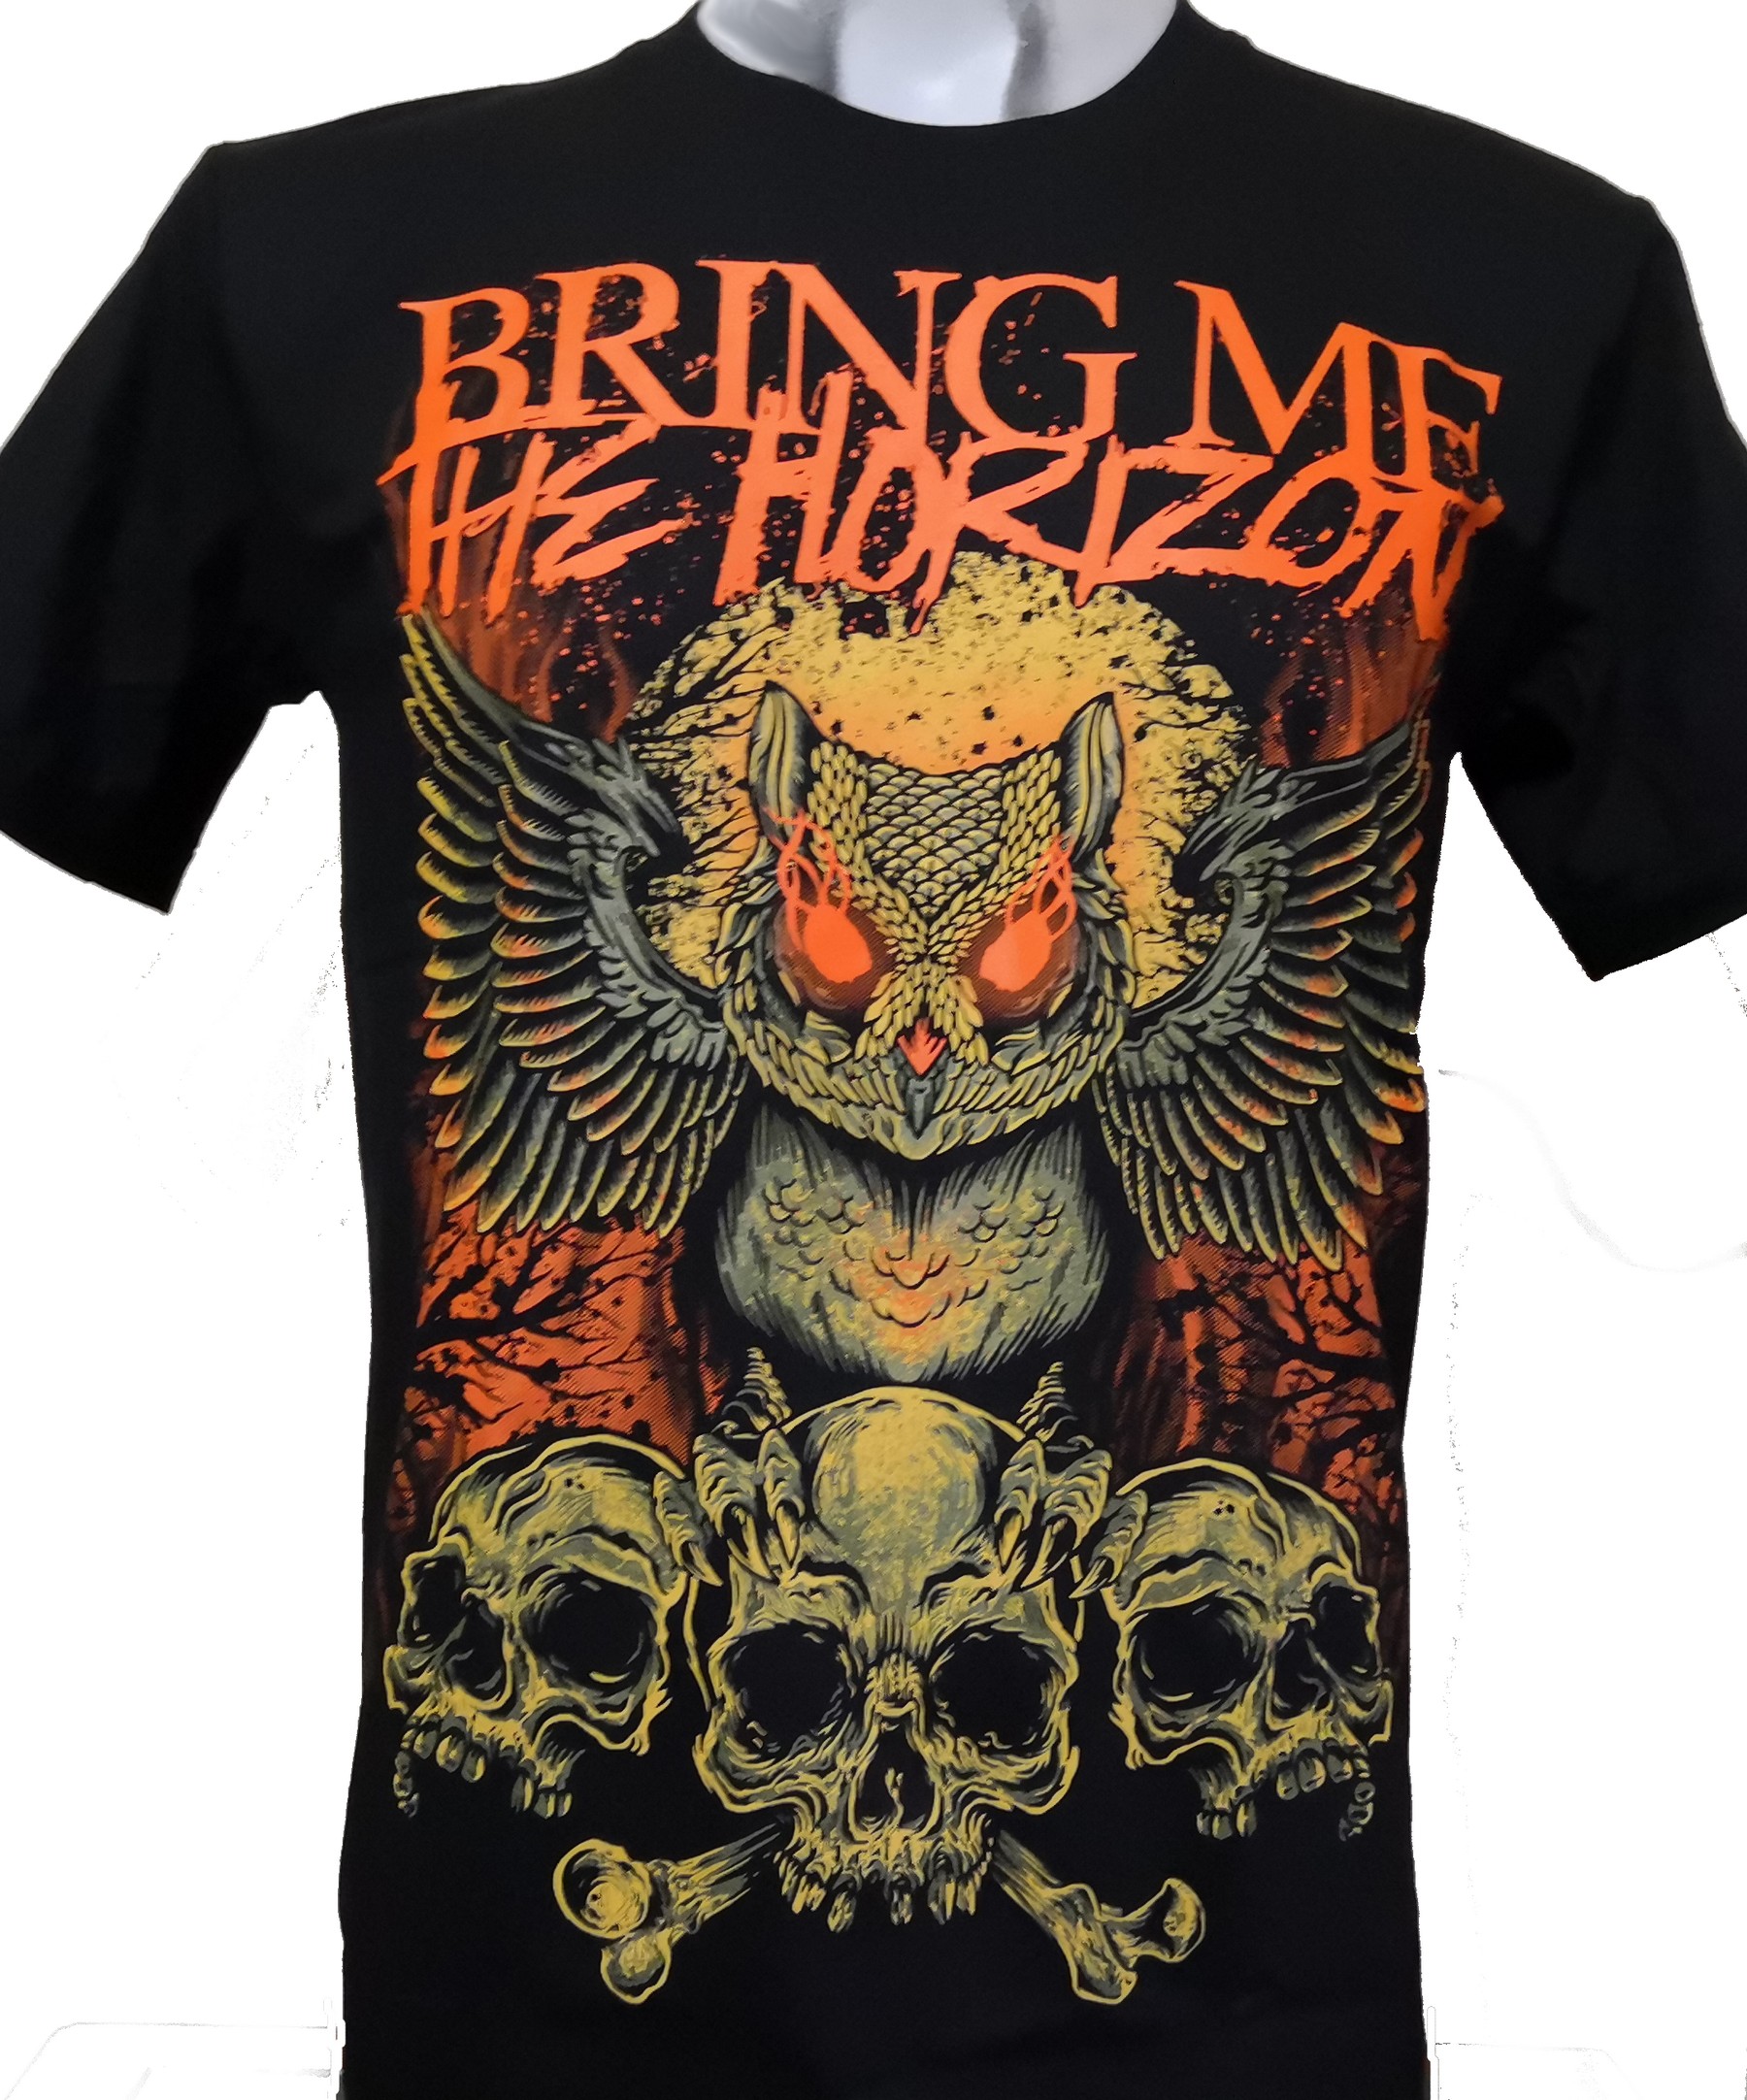 Bring Me The Horizon t-shirt size M